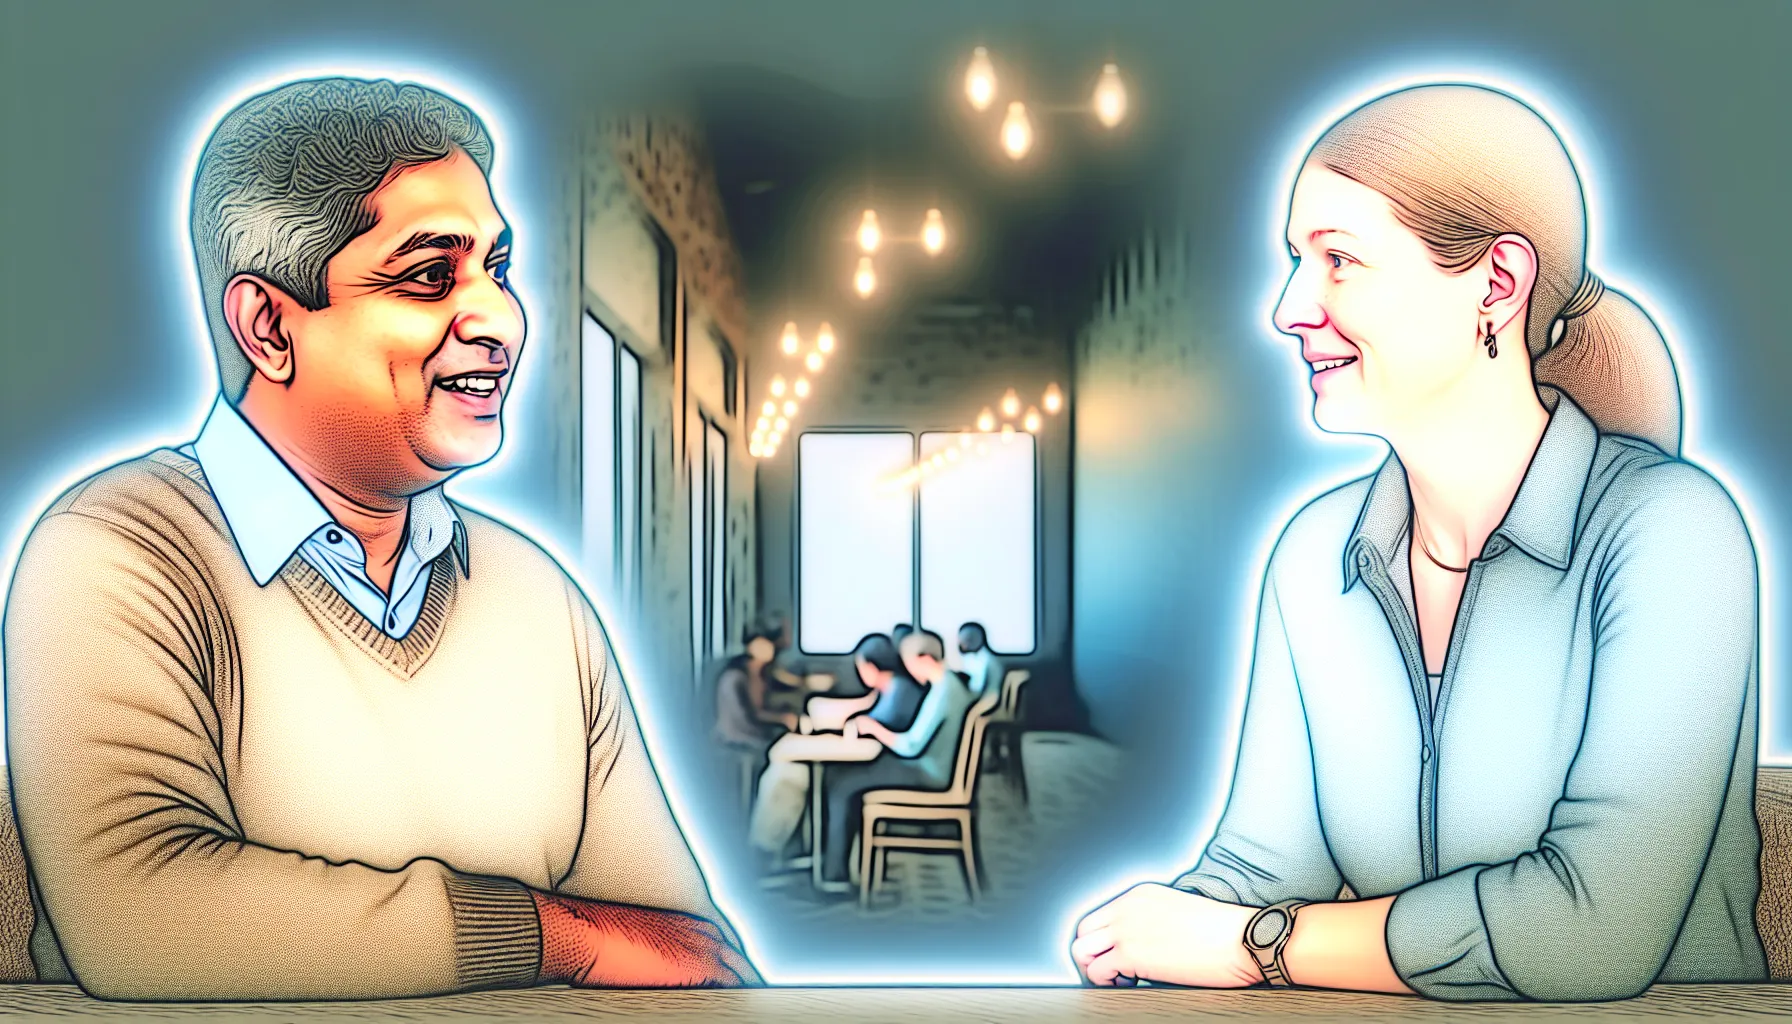 Two people having a cozy conversation at a café